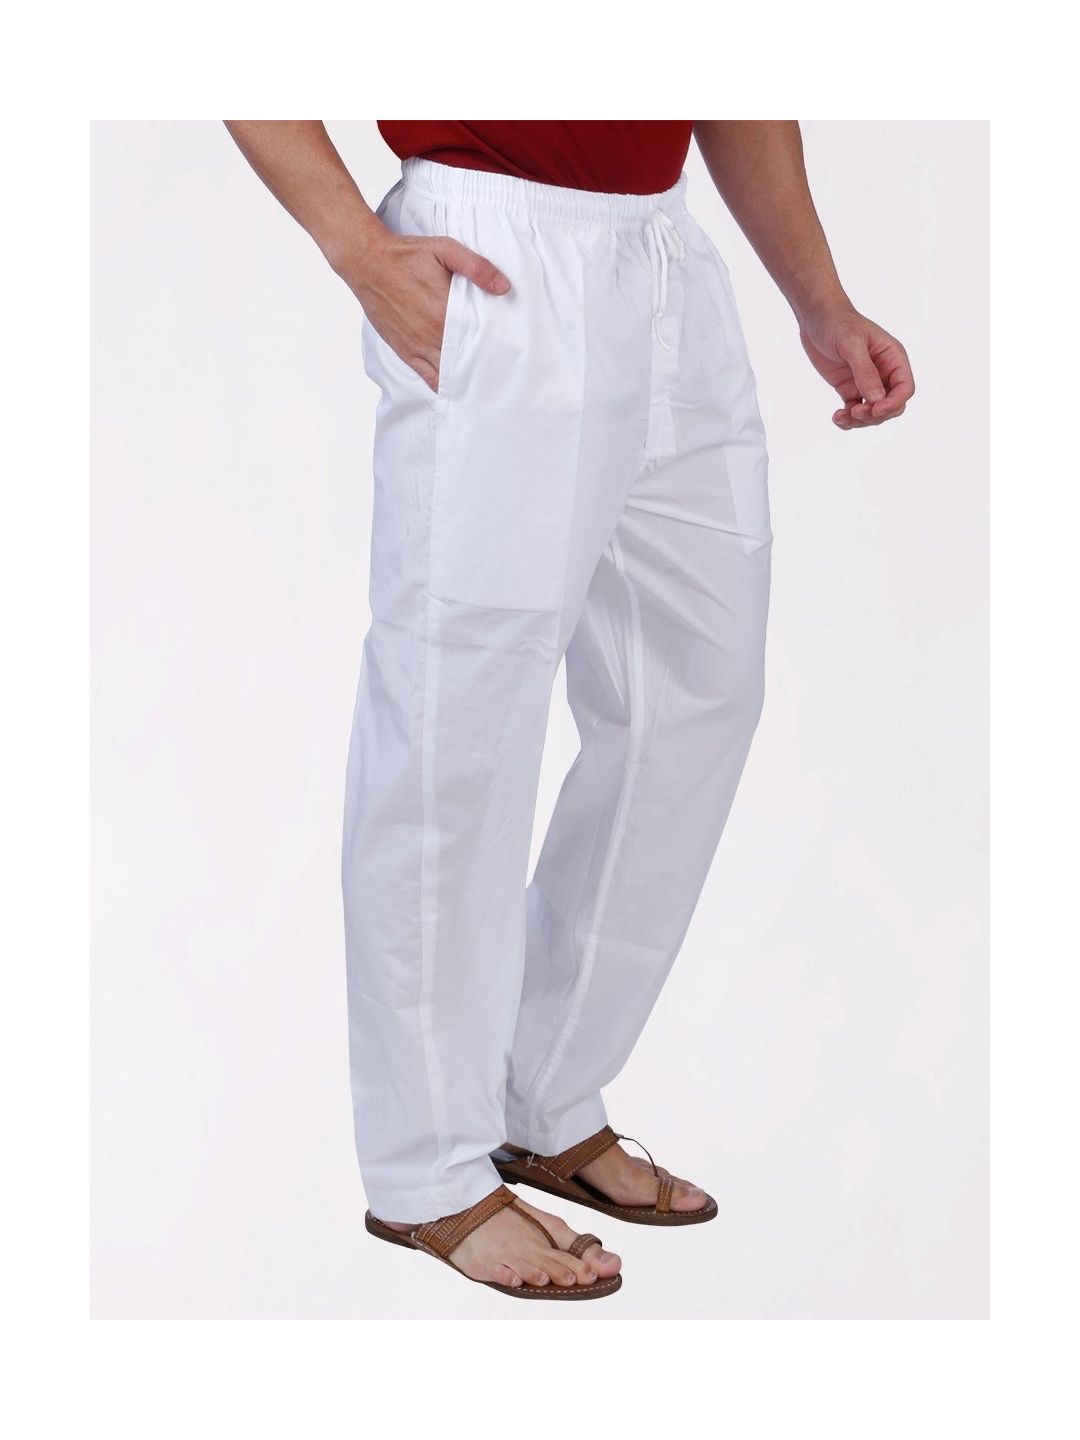 Our comfortable pantcut pyjamas – VIDYARTHI KHADI BHANDAR